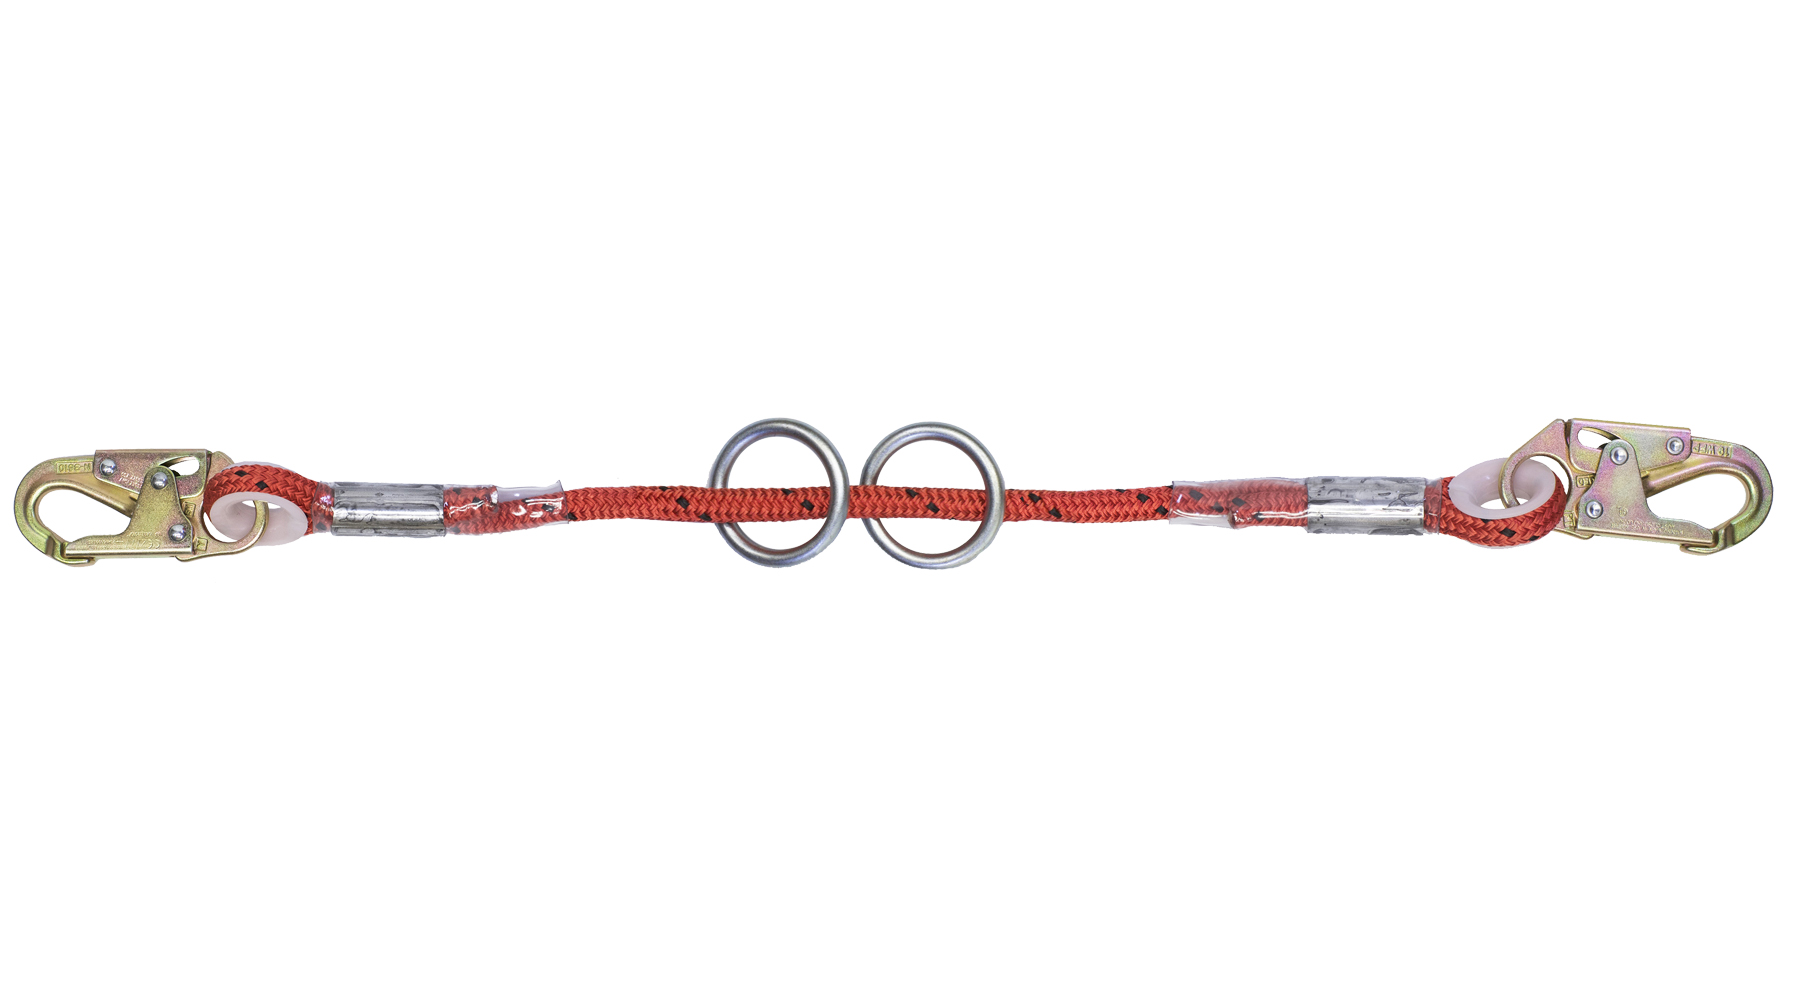 Horizontal Lifeline Rope System 30 Degree Fixed Length – Super